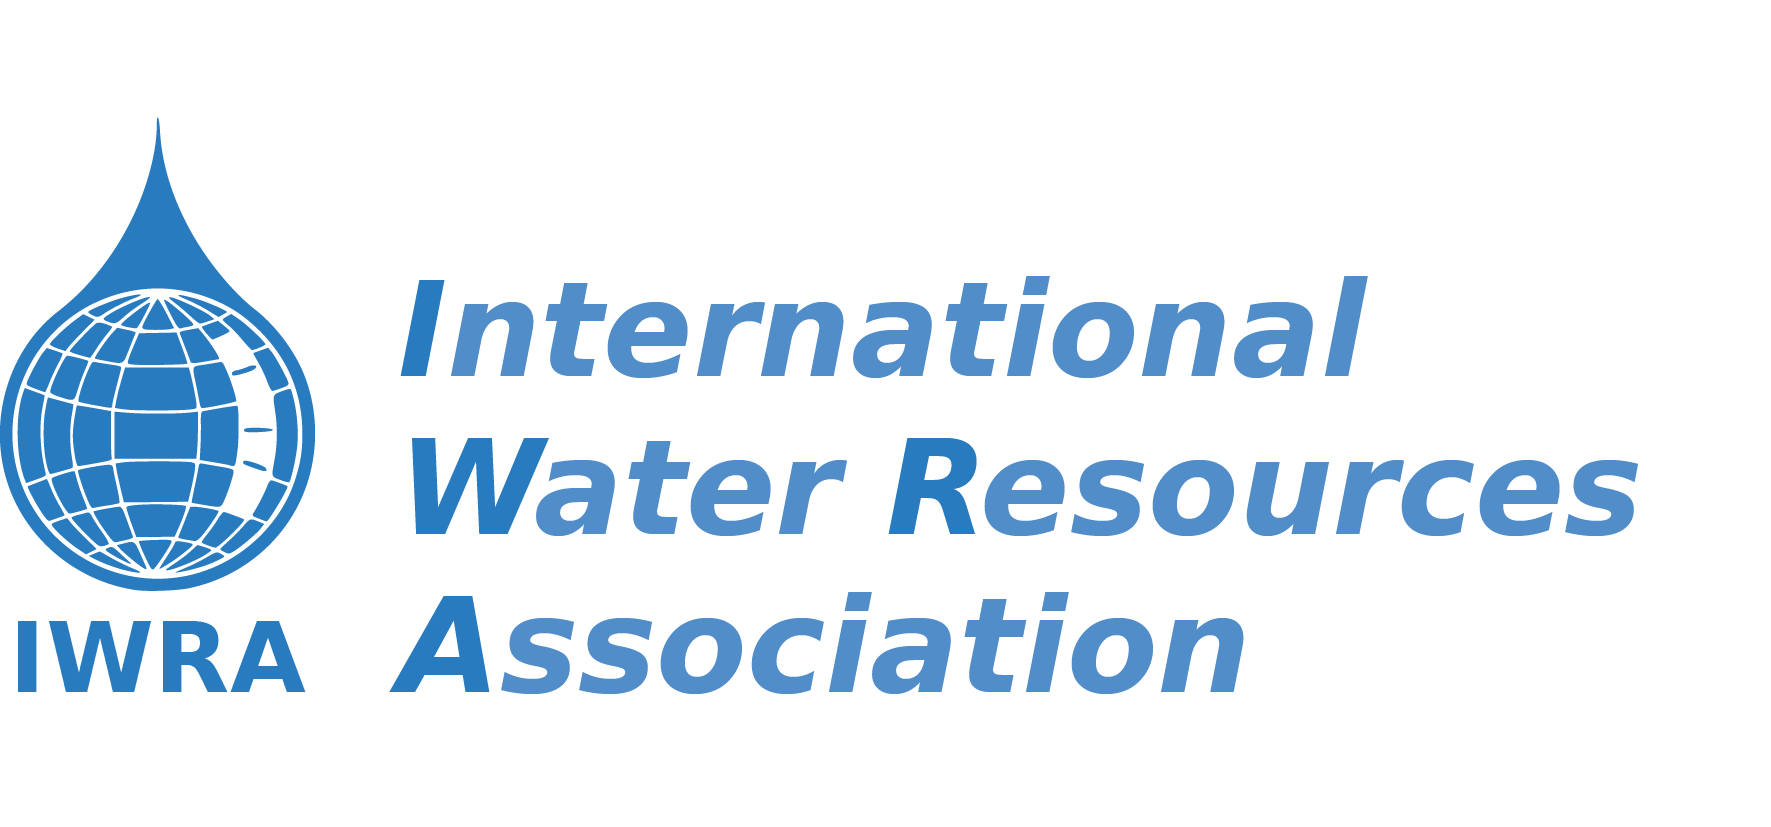 INTERNATIONAL WATER RESOURCES ASSOCIATION – IWRA